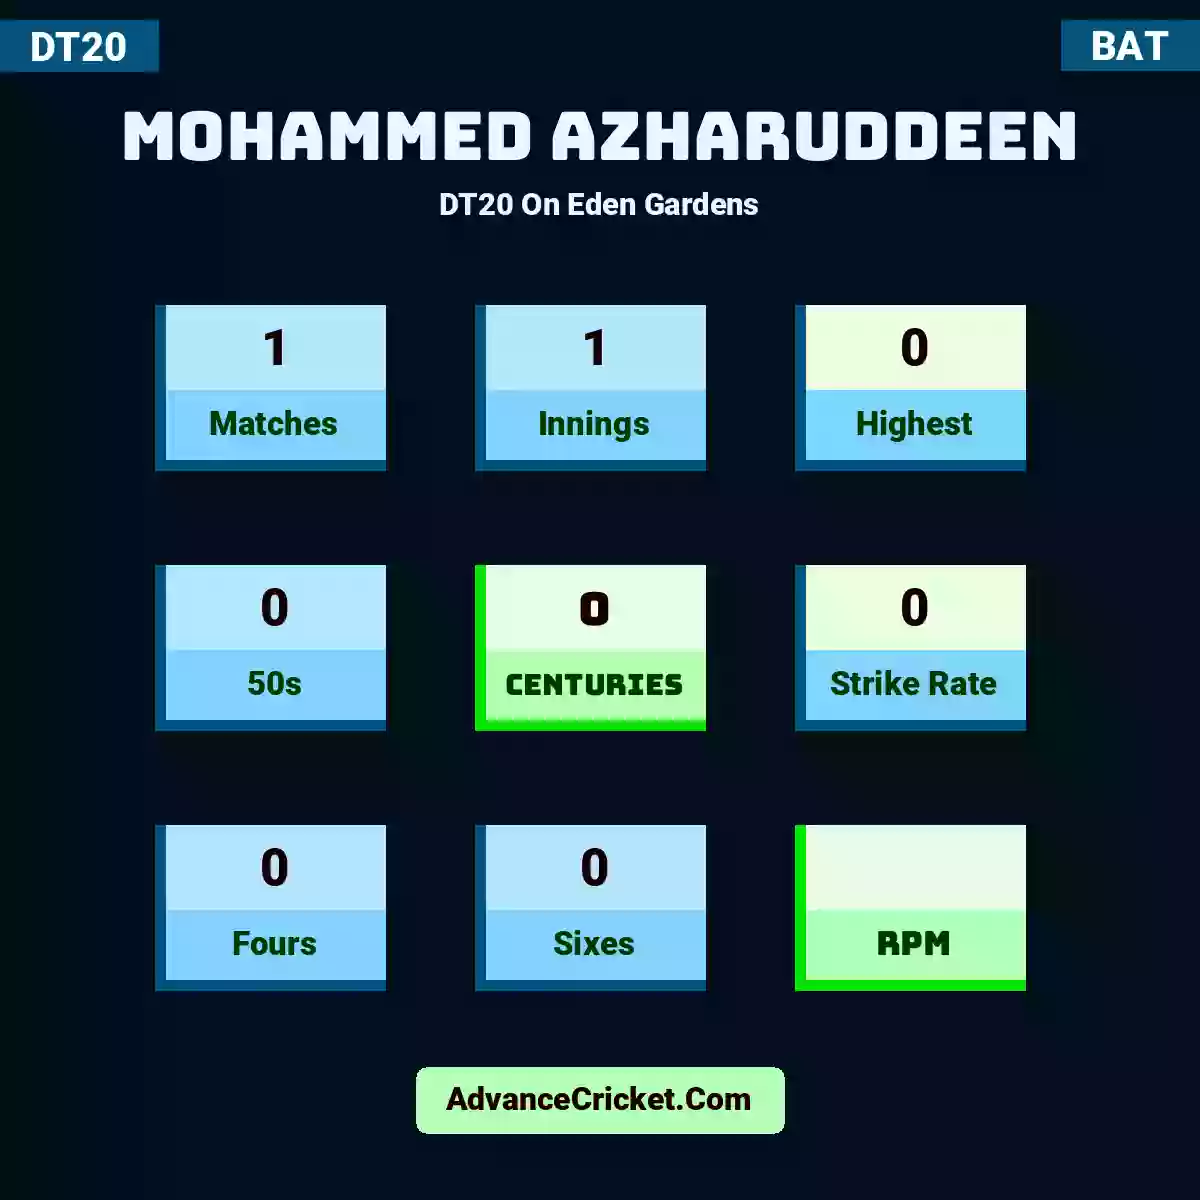 Mohammed Azharuddeen DT20  On Eden Gardens, Mohammed Azharuddeen played 1 matches, scored 0 runs as highest, 0 half-centuries, and 0 centuries, with a strike rate of 0. M.Azharuddeen hit 0 fours and 0 sixes.